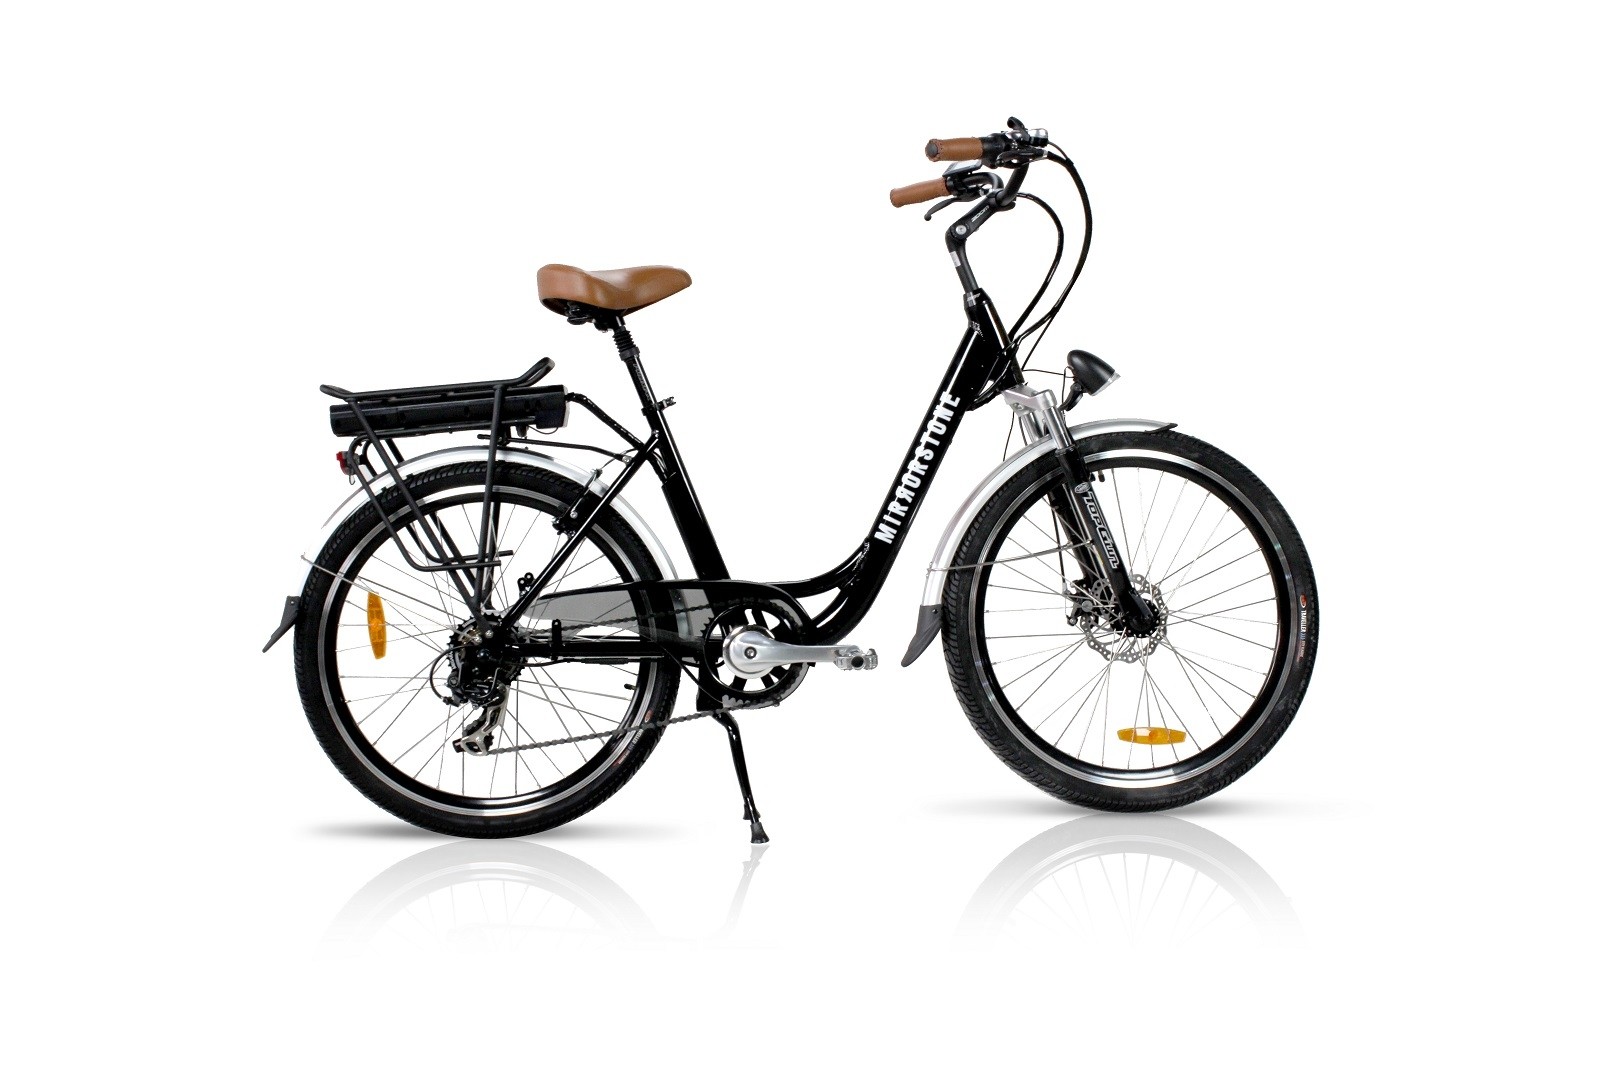 Vintage Dutch Style Electric Bike Black 26" Wheels - Unisex Bike - Only 2 Left!